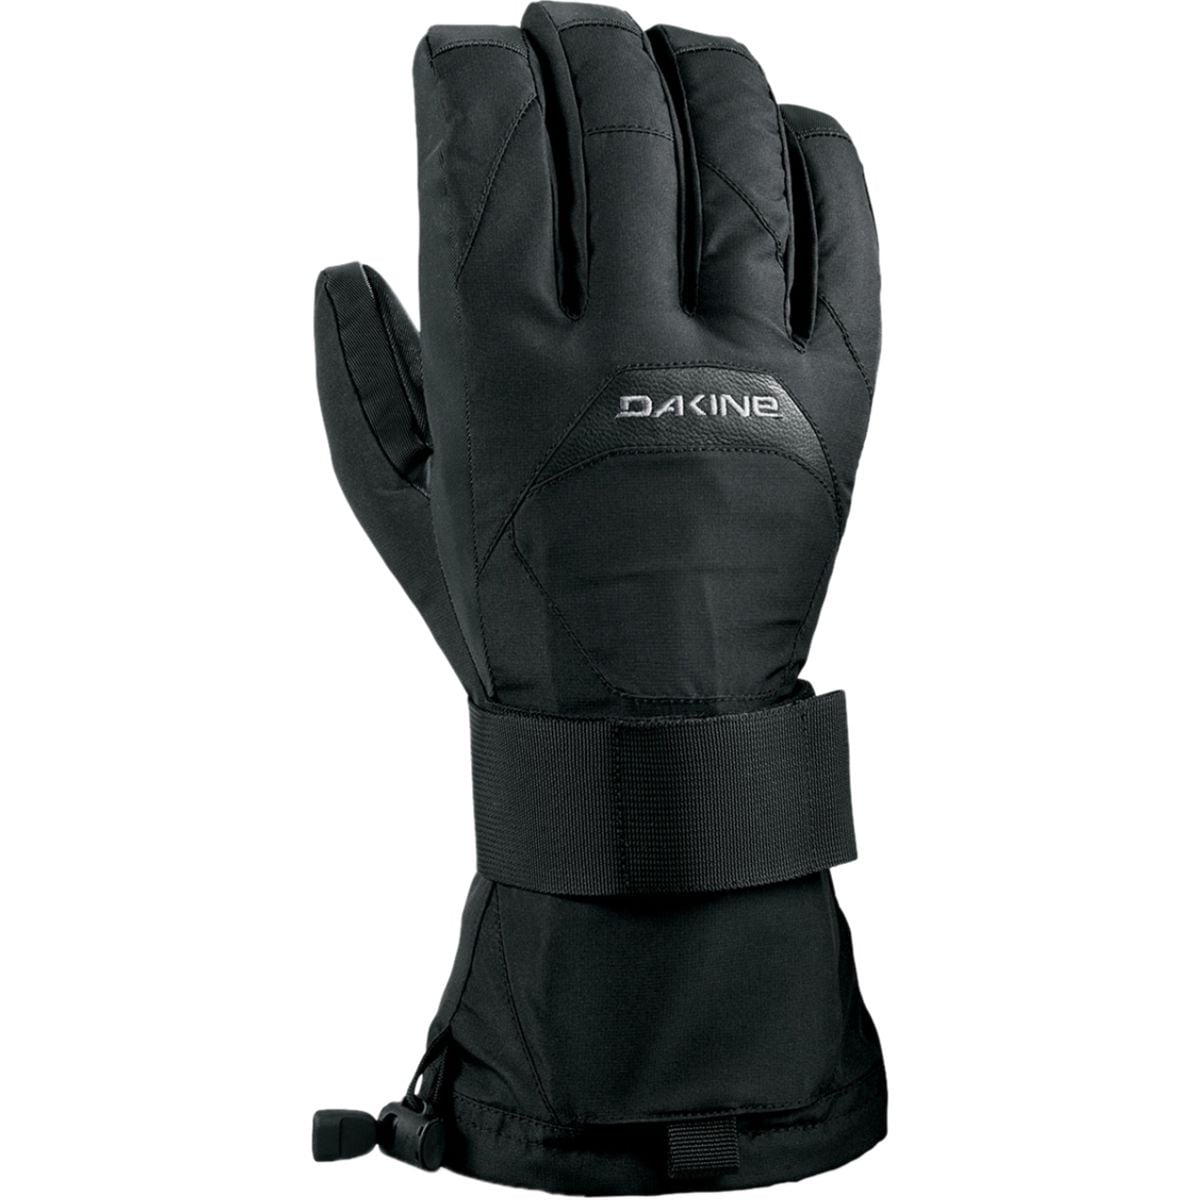 DAKINE Wristguard Glove - Men's Black